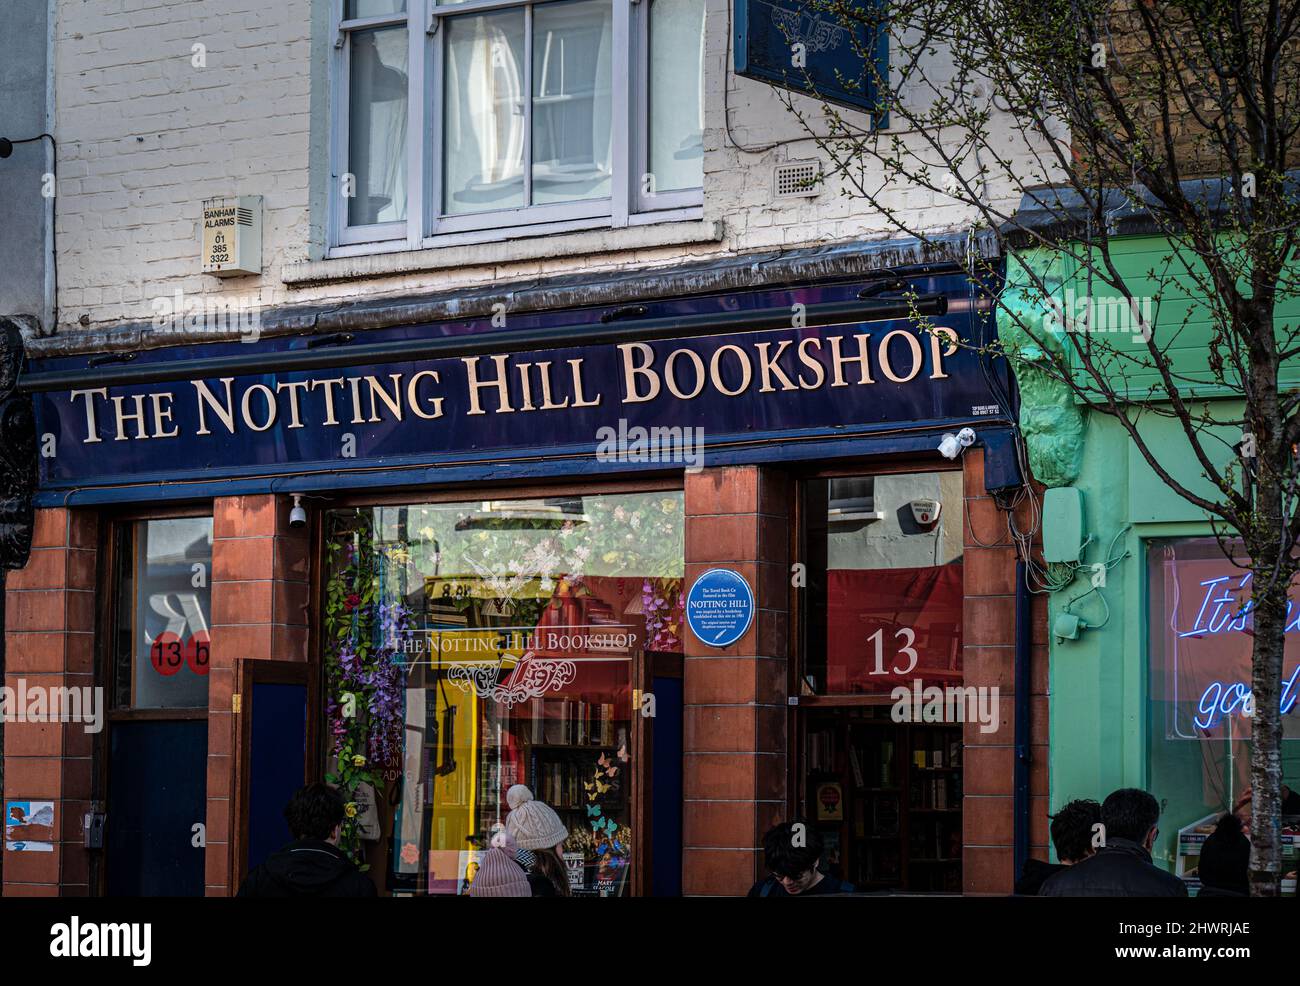 The Notting Hill Bookshop, Blenheim Crescent, London, W11, England, UK  Stock Photo - Alamy